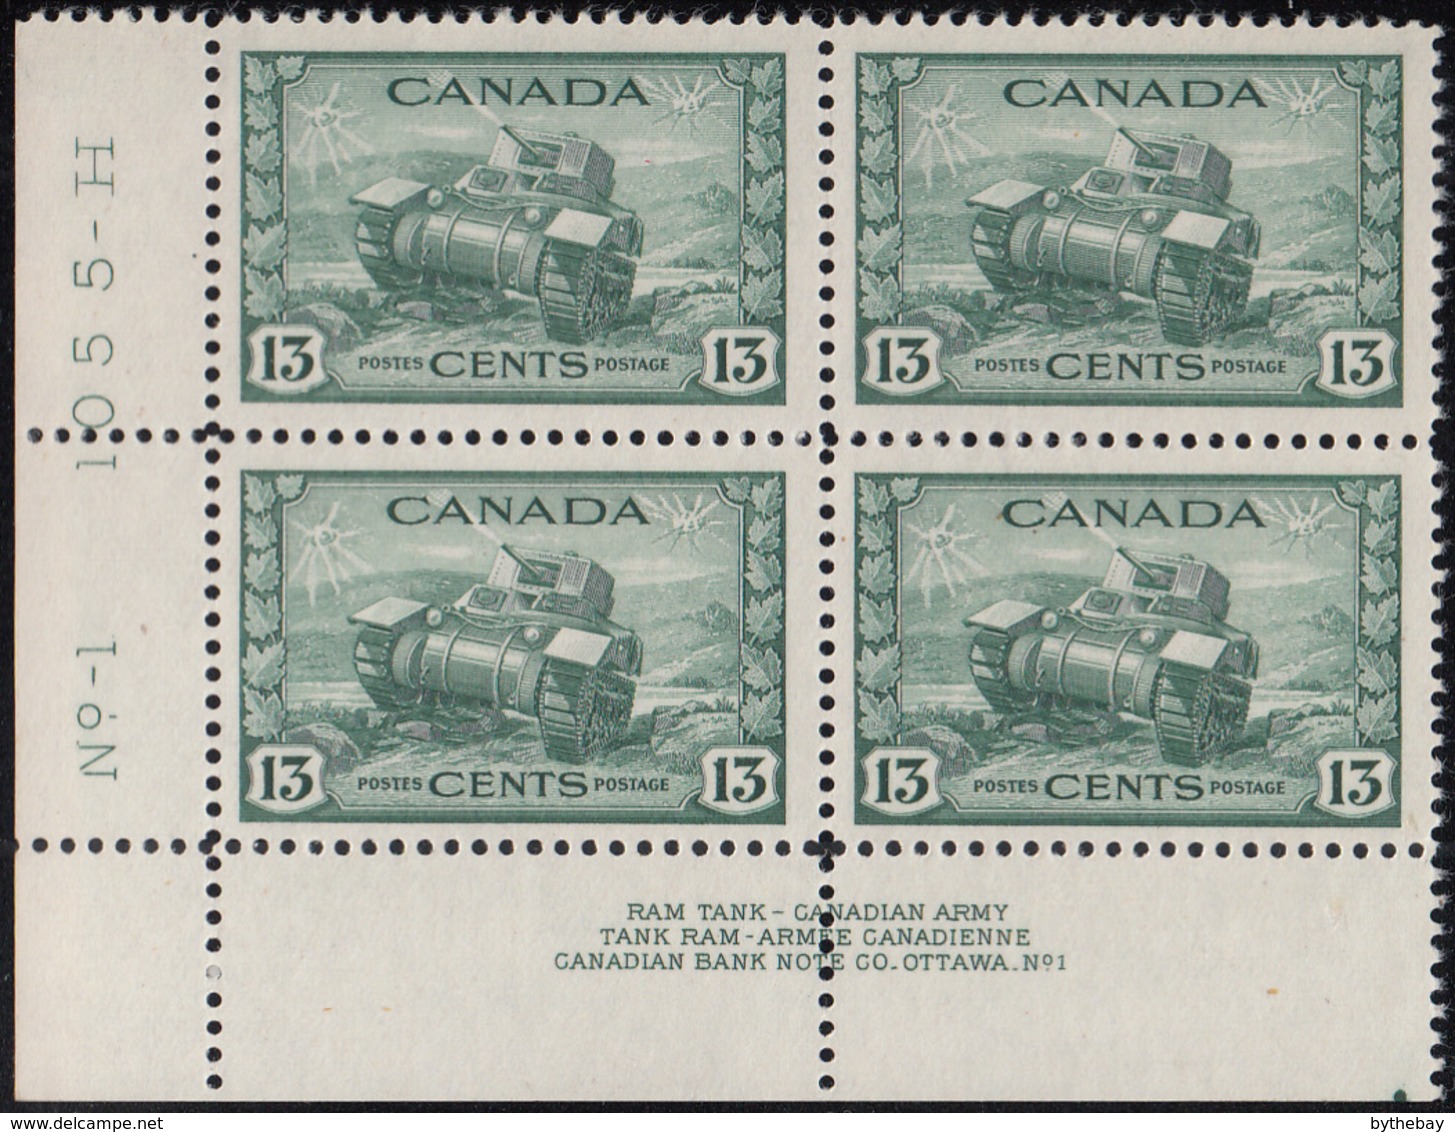 Canada 1942 MNH Sc #258 13c Ram Tank Plate 1 LL Block Of 4 - Plate Number & Inscriptions